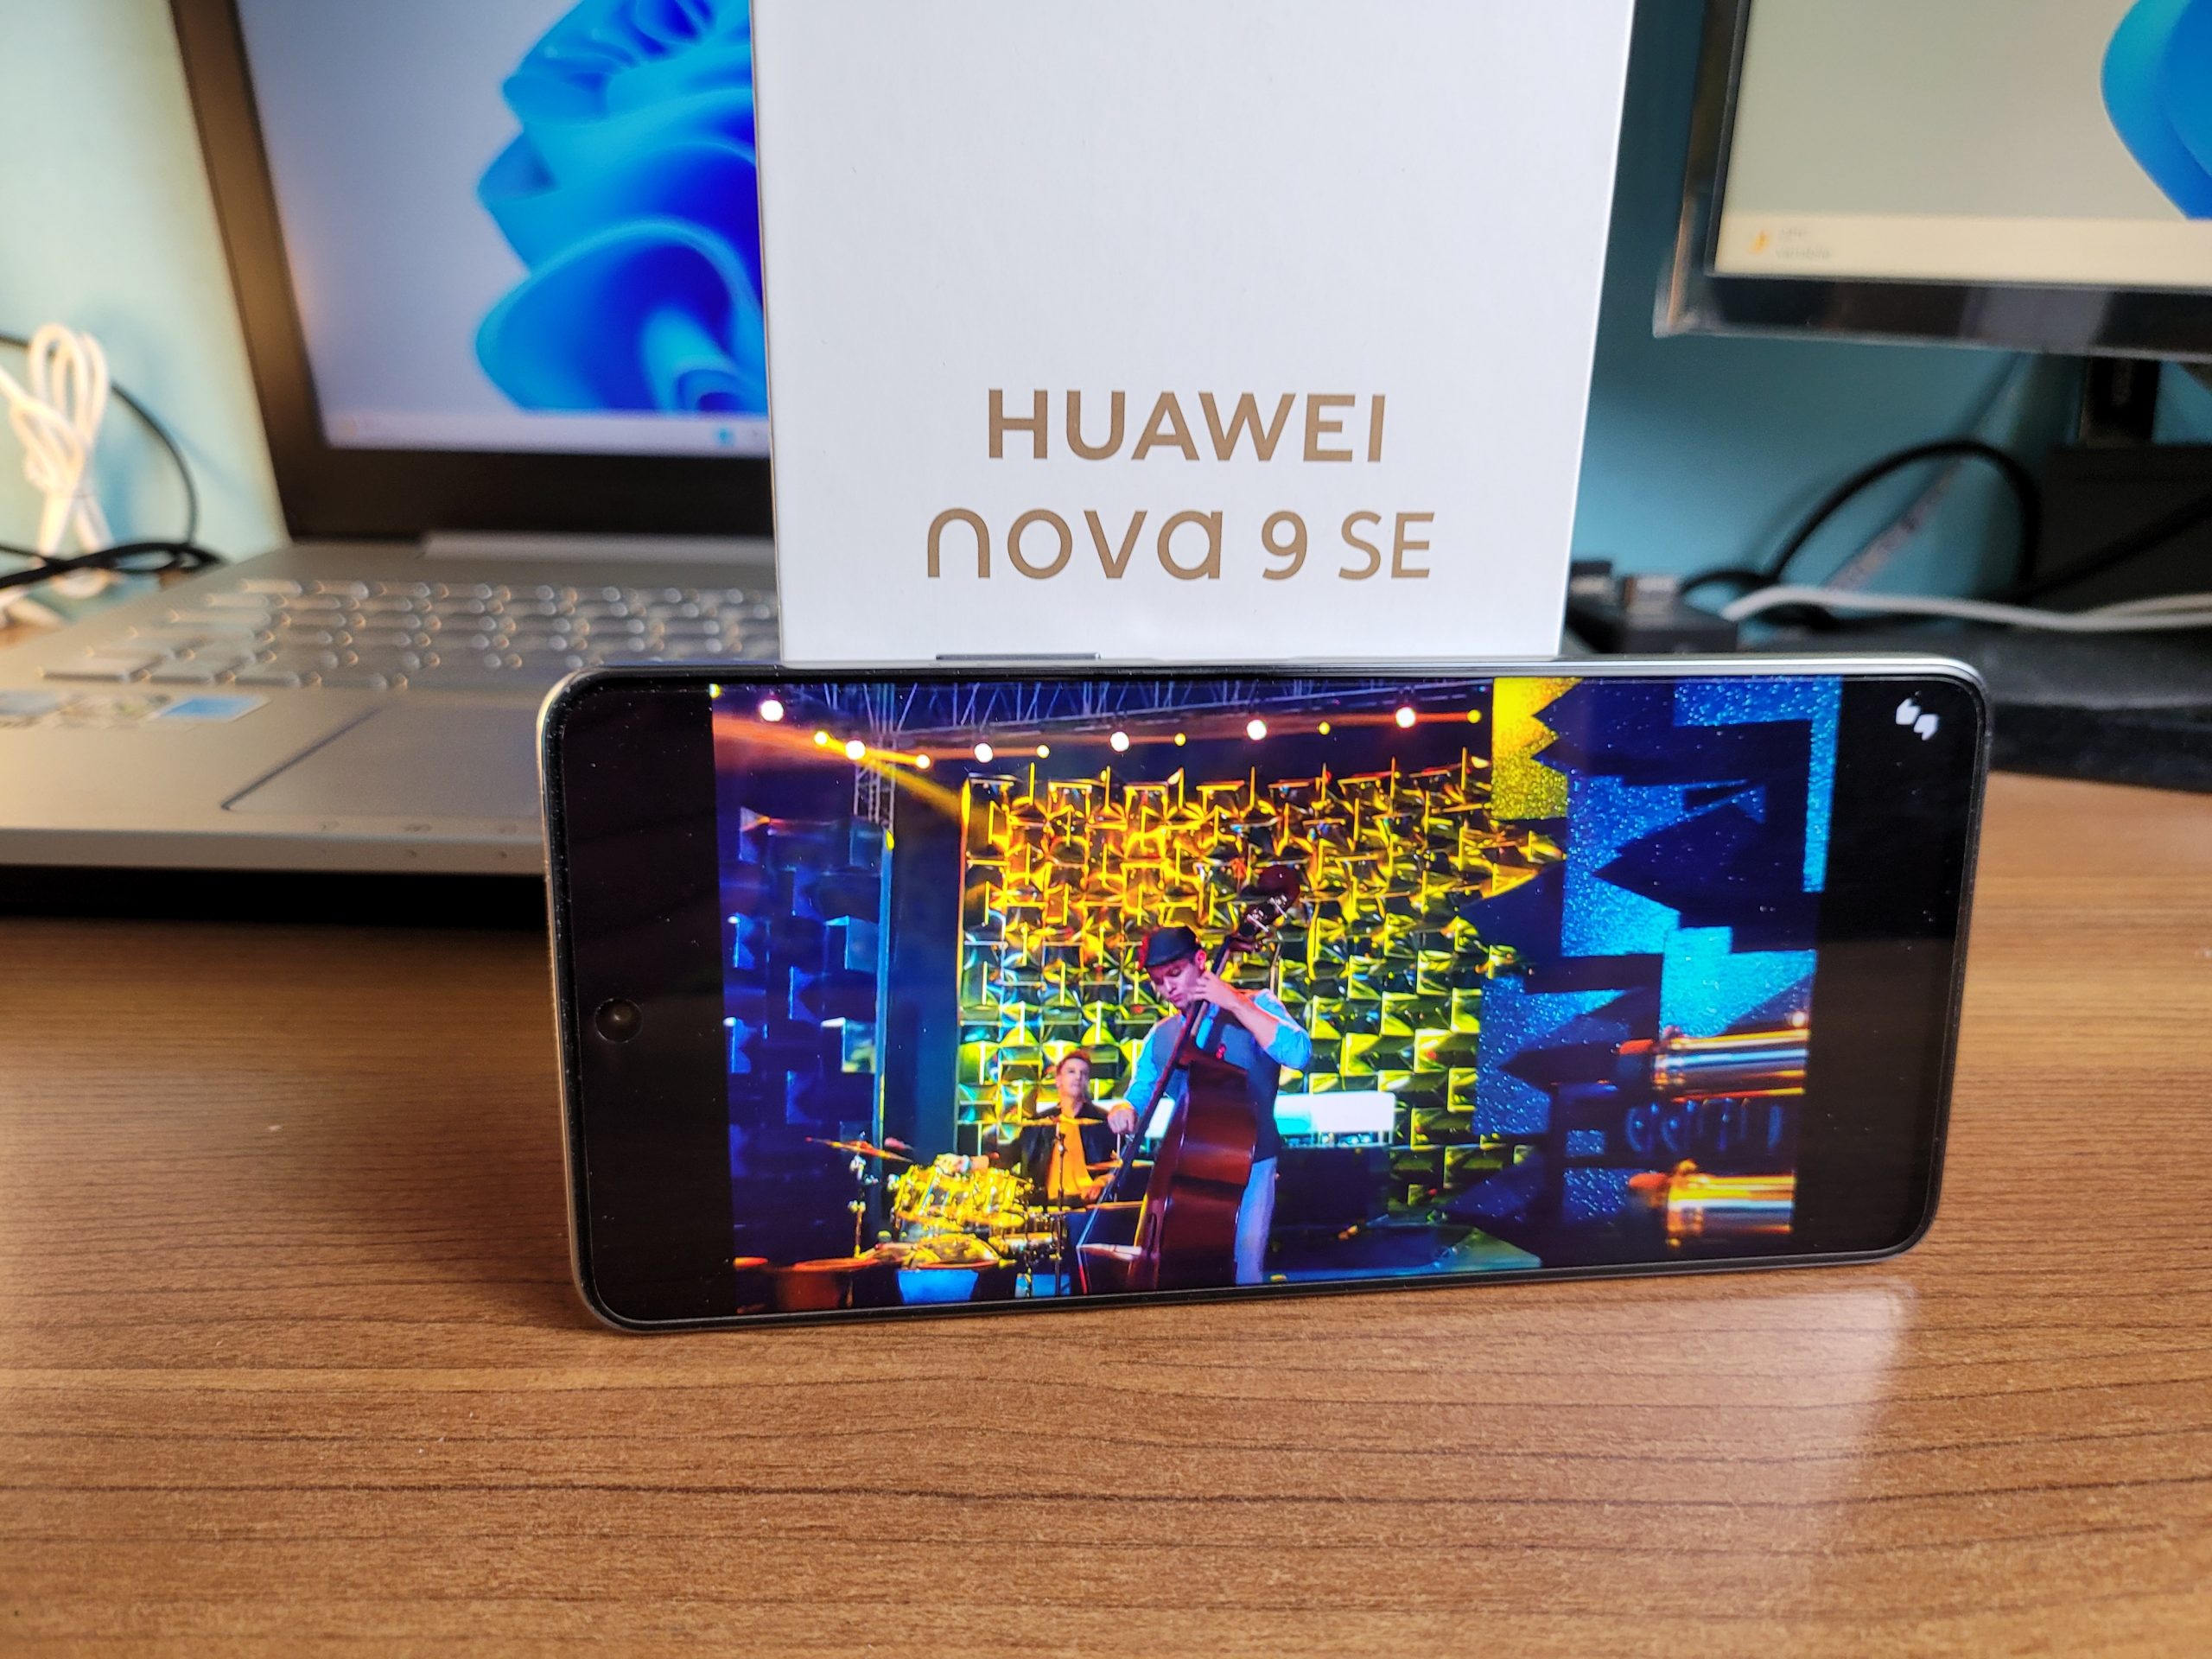 20220513 214932 scaled - Huawei Nova 9 SE recensione